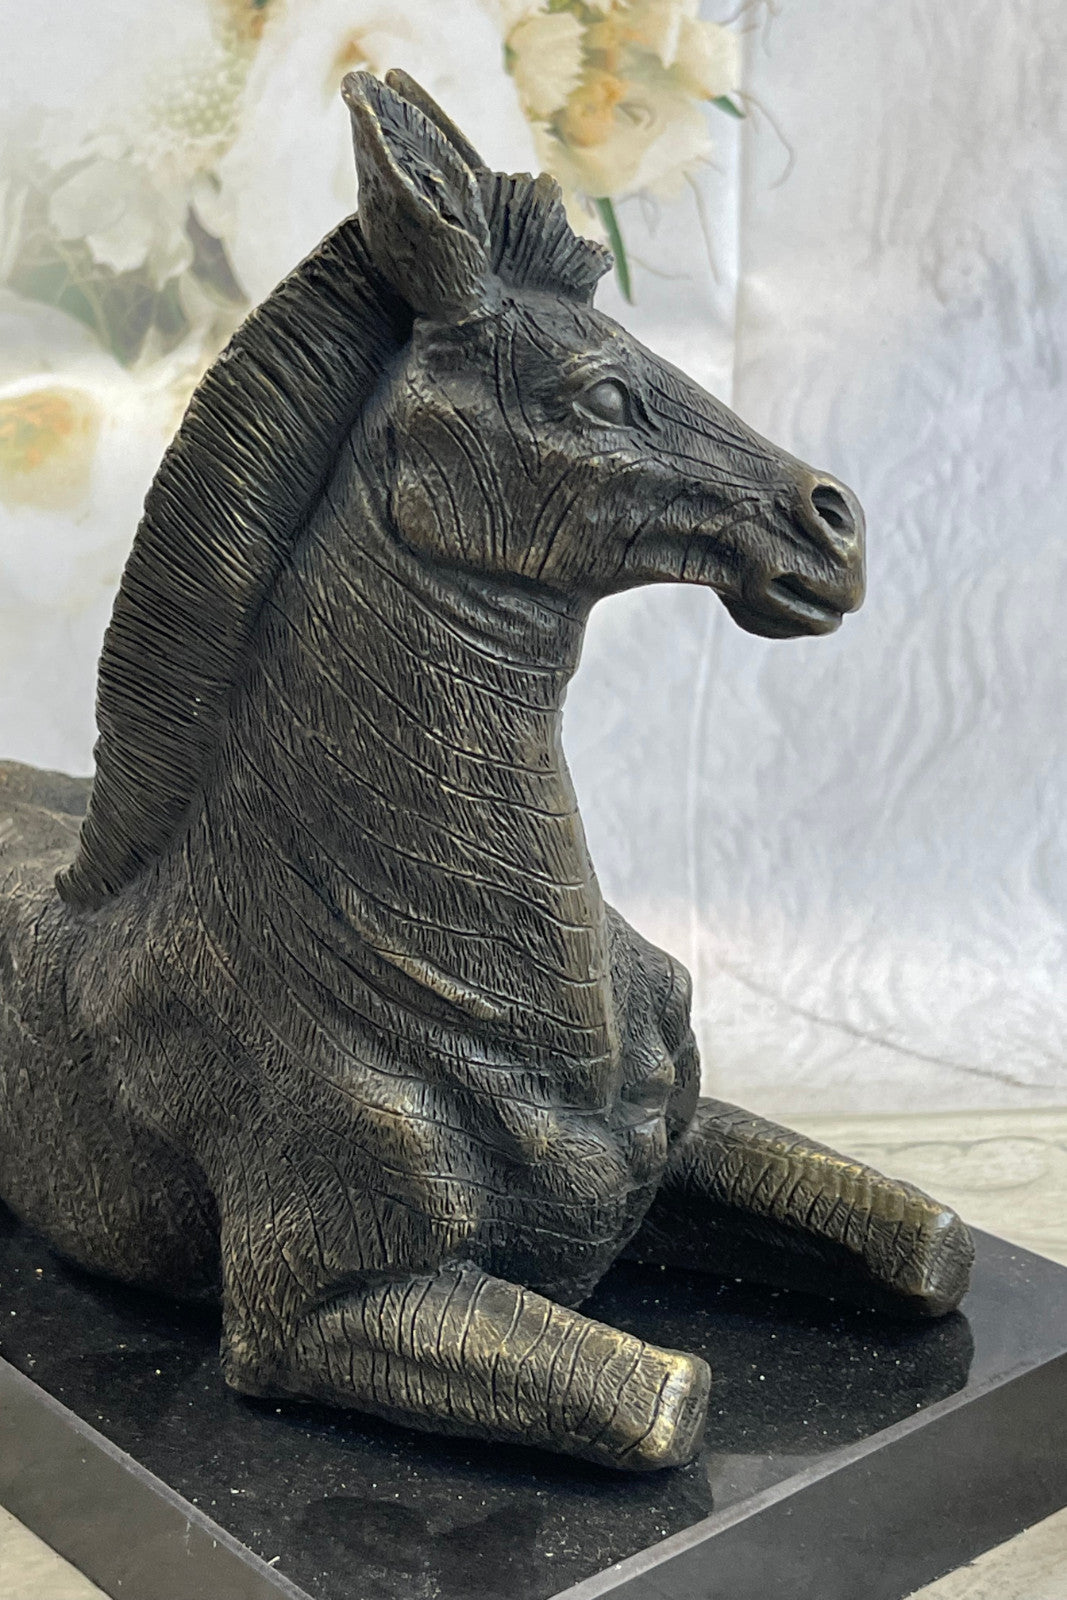 Handcrafted bronze sculpture SALE Decor Base Marble Deco Art Zebra African